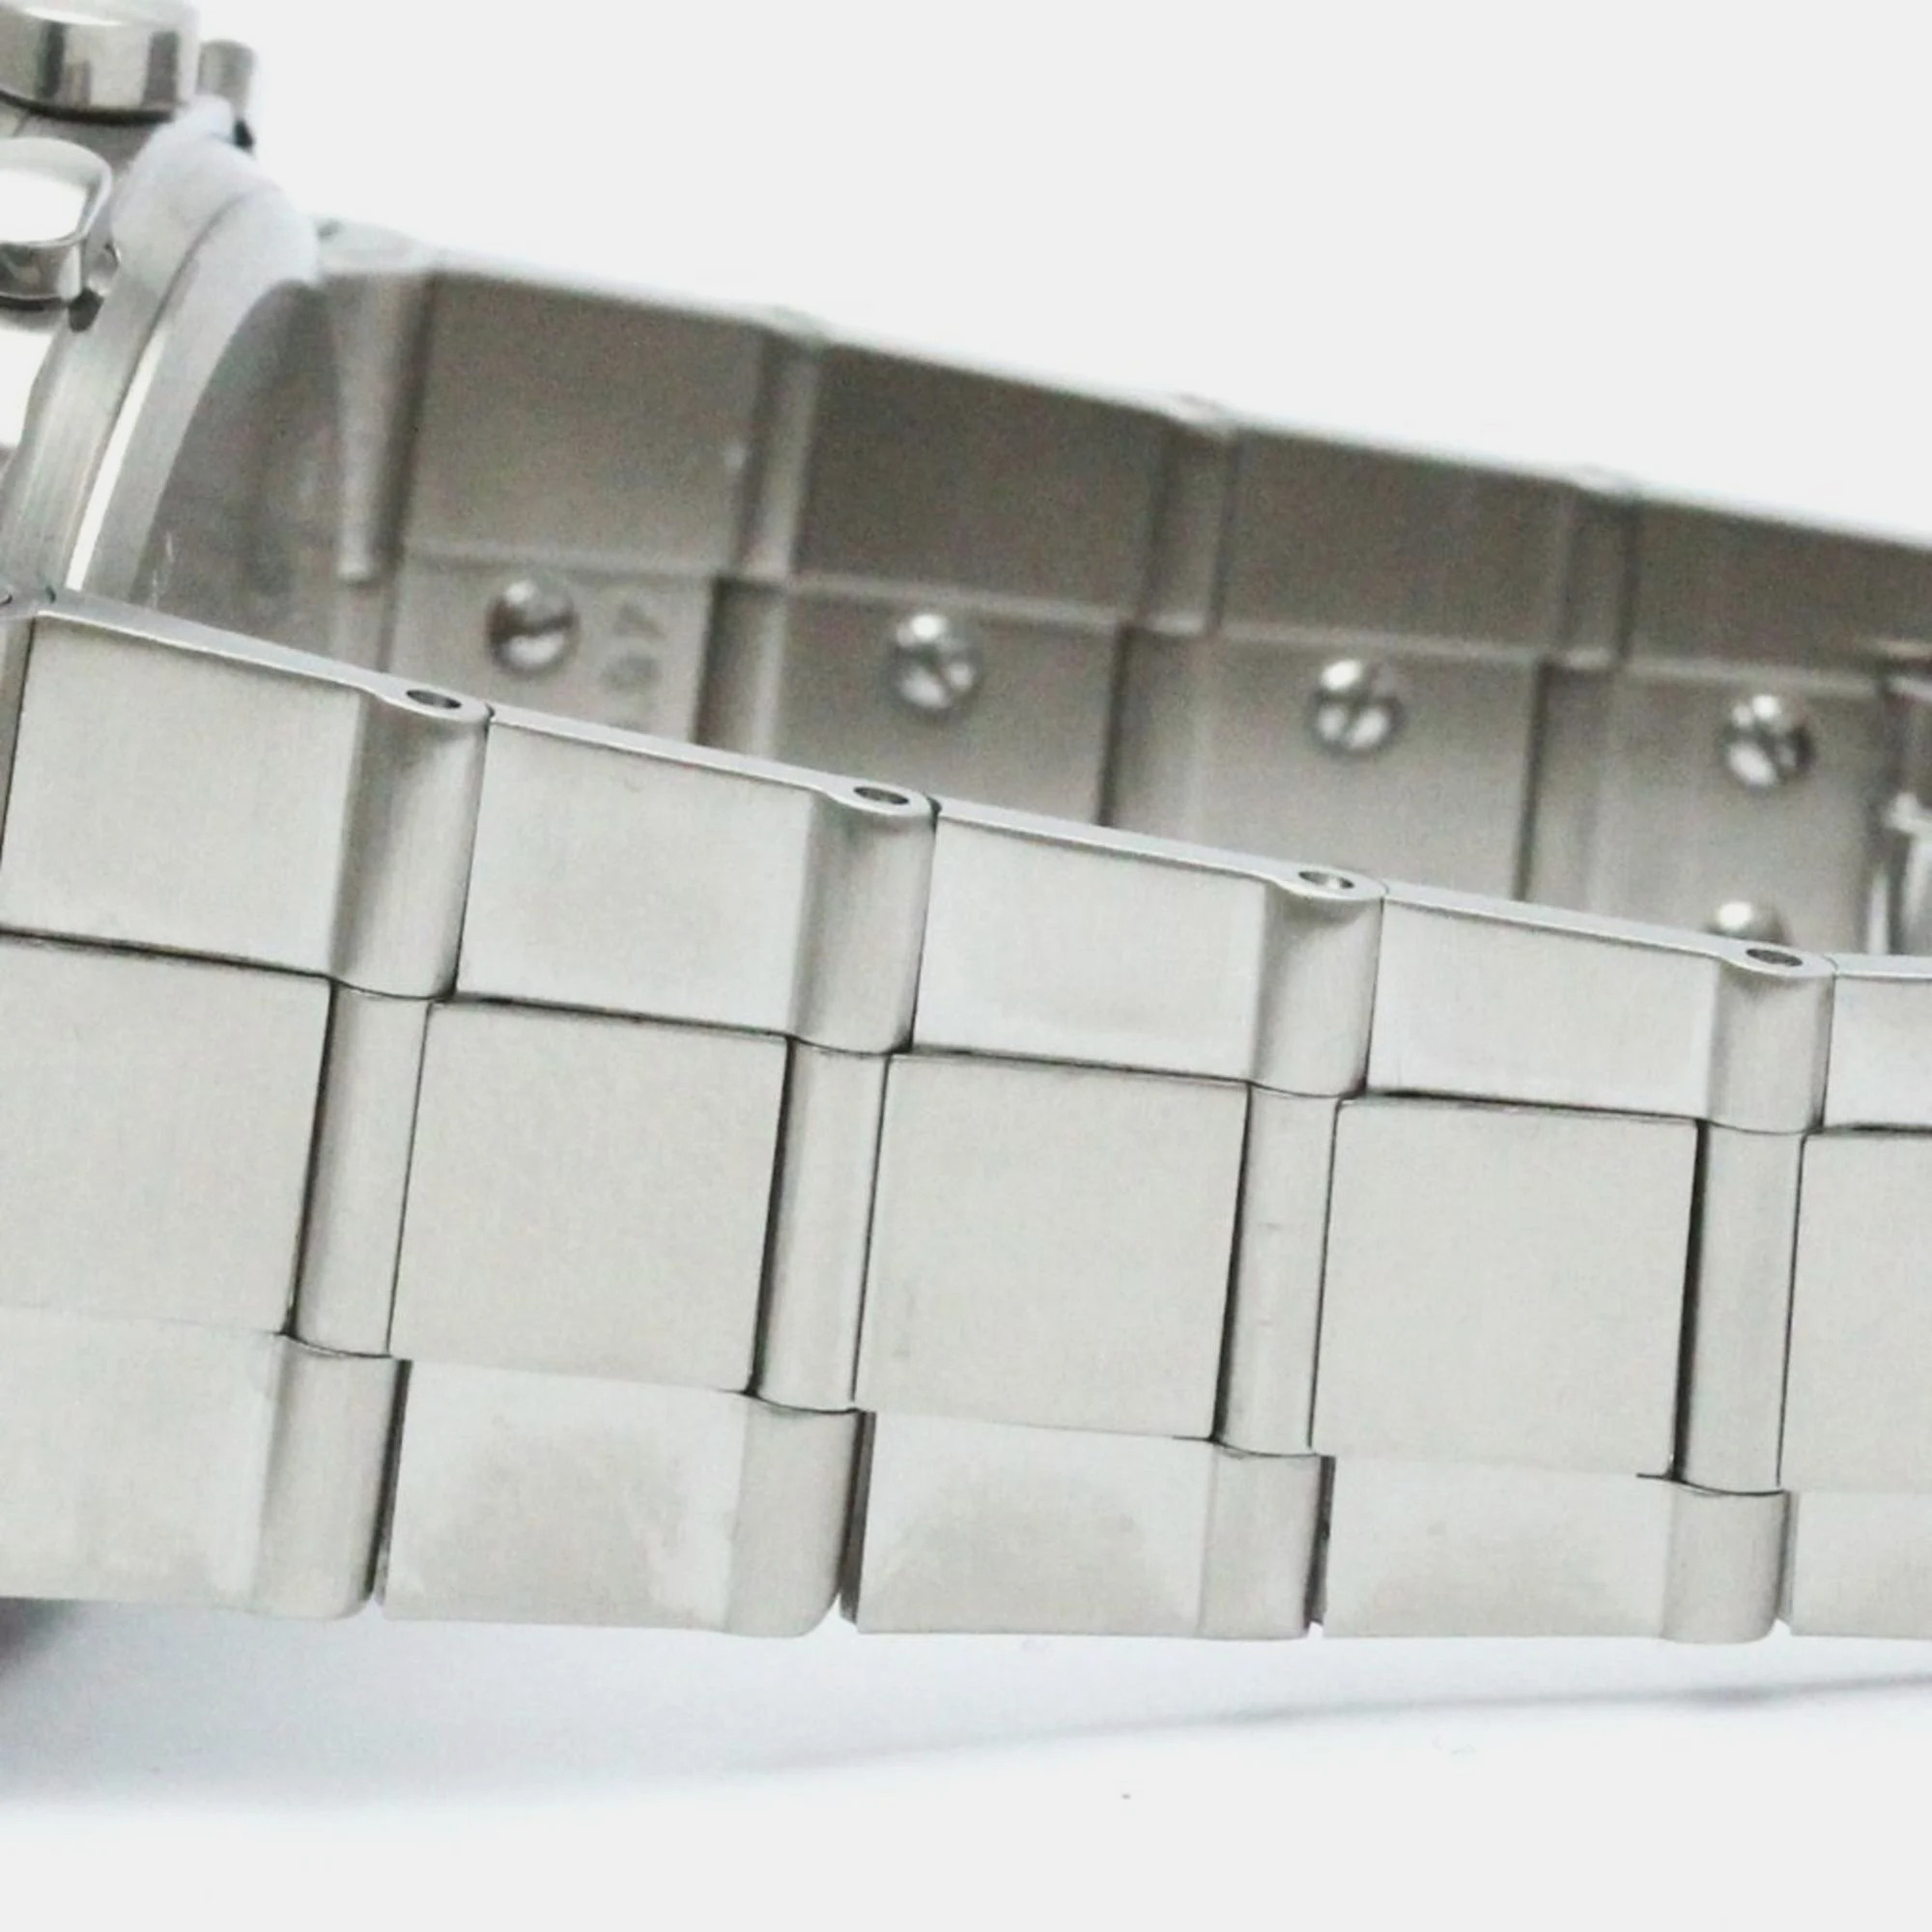 Bvlgari White Stainless Steel Diagono CH35S  Quartz Men's Wristwatch 35 Mm